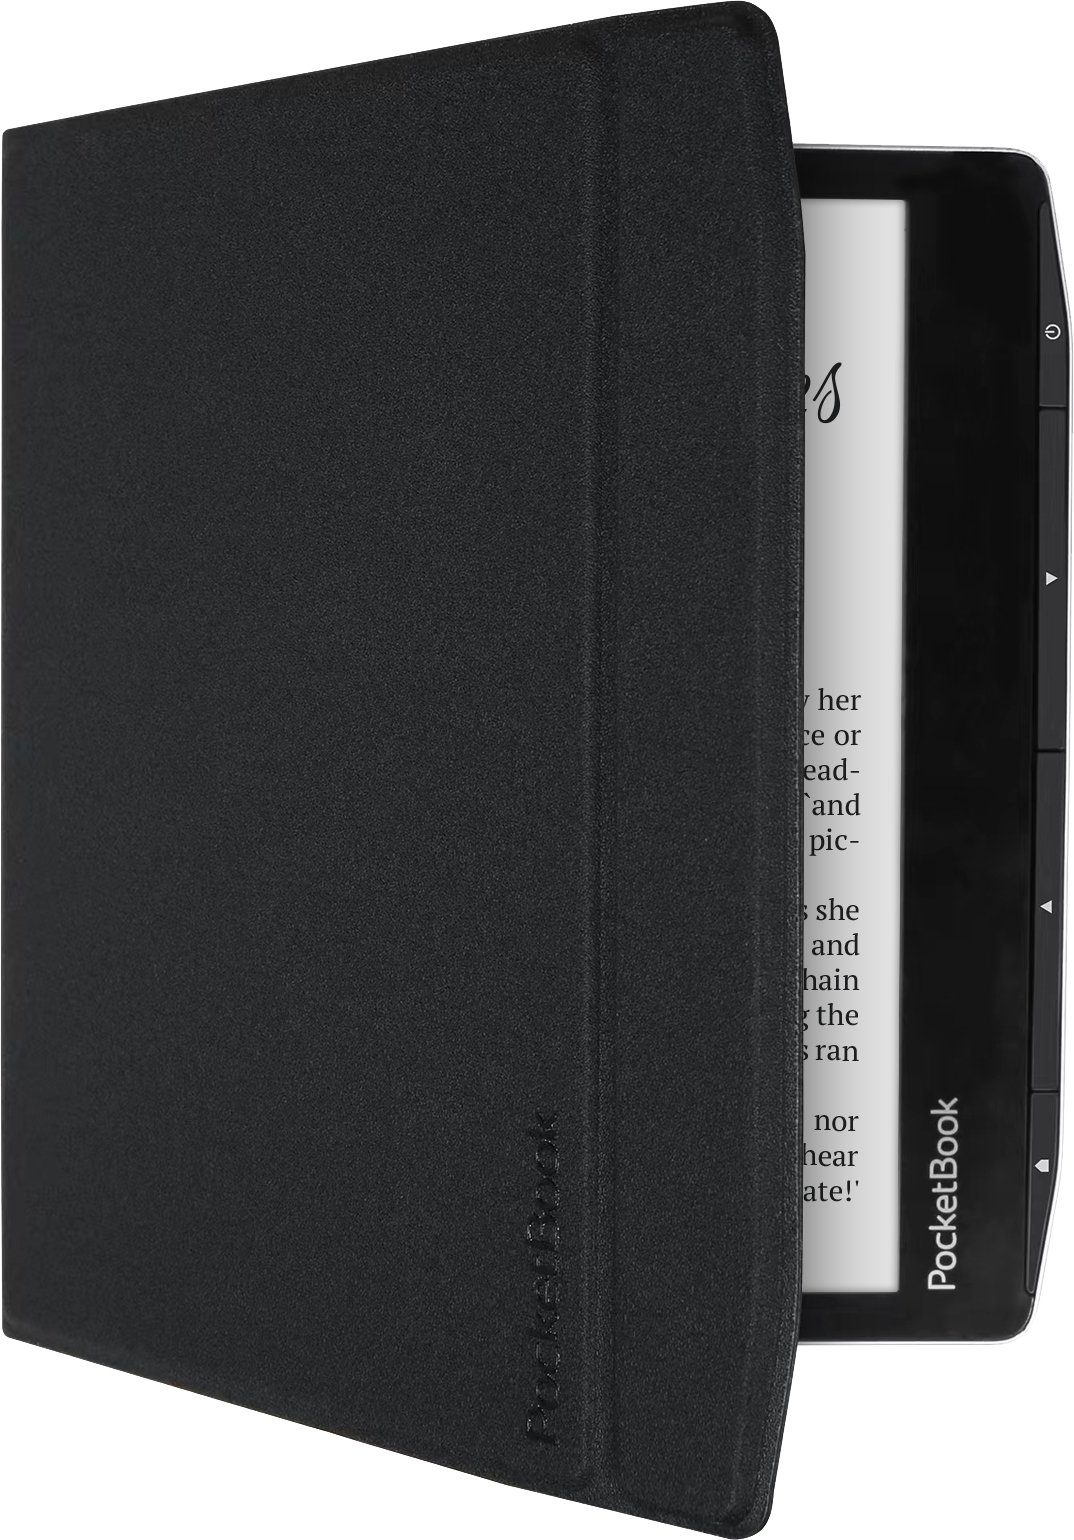 PocketBook Flip Case Flip